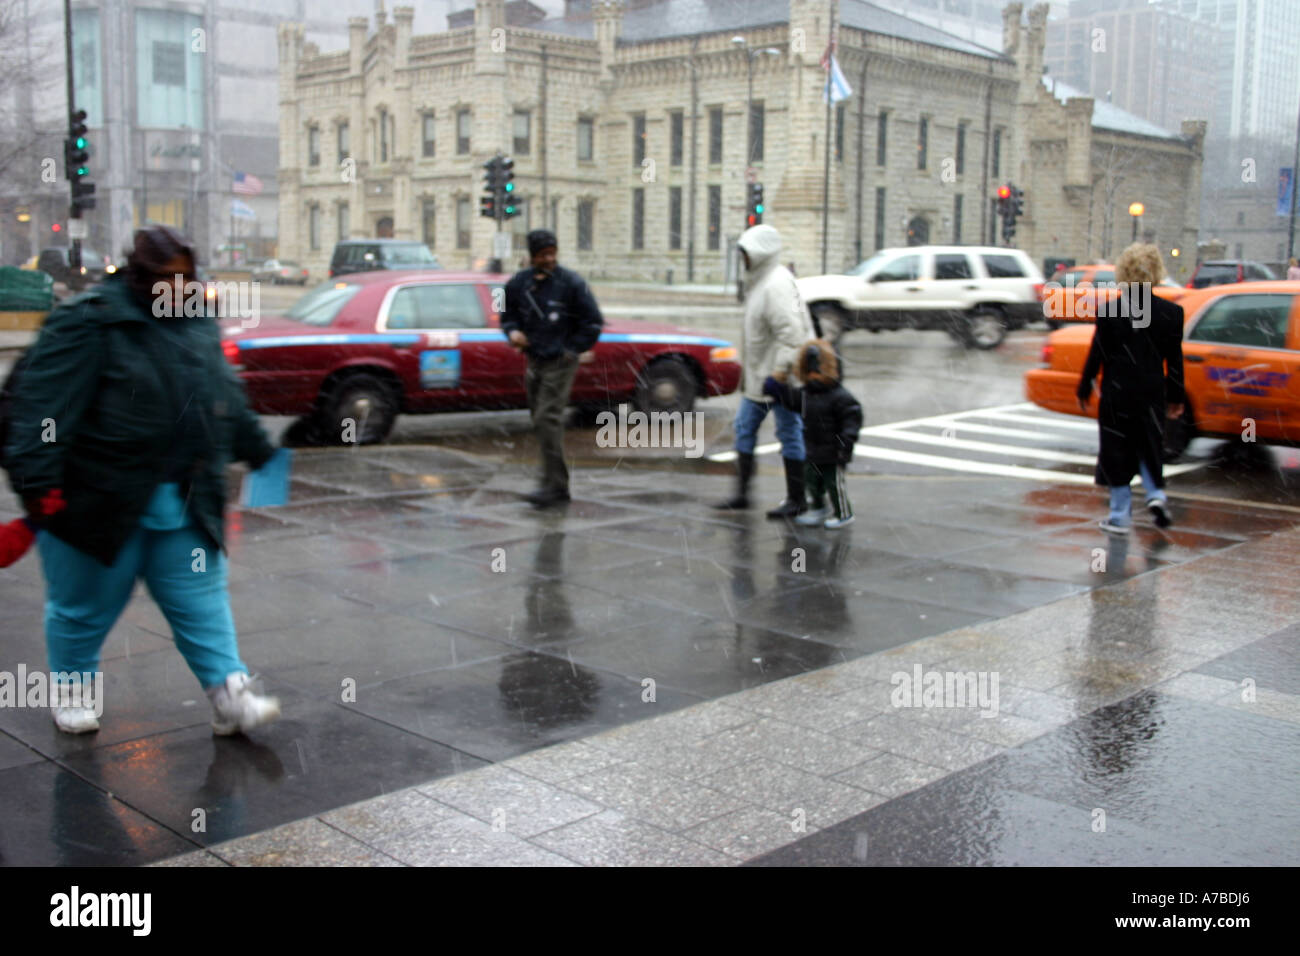 people walking in a rain storm Michigan Avenue, Chicago, IL USA Stock Photo